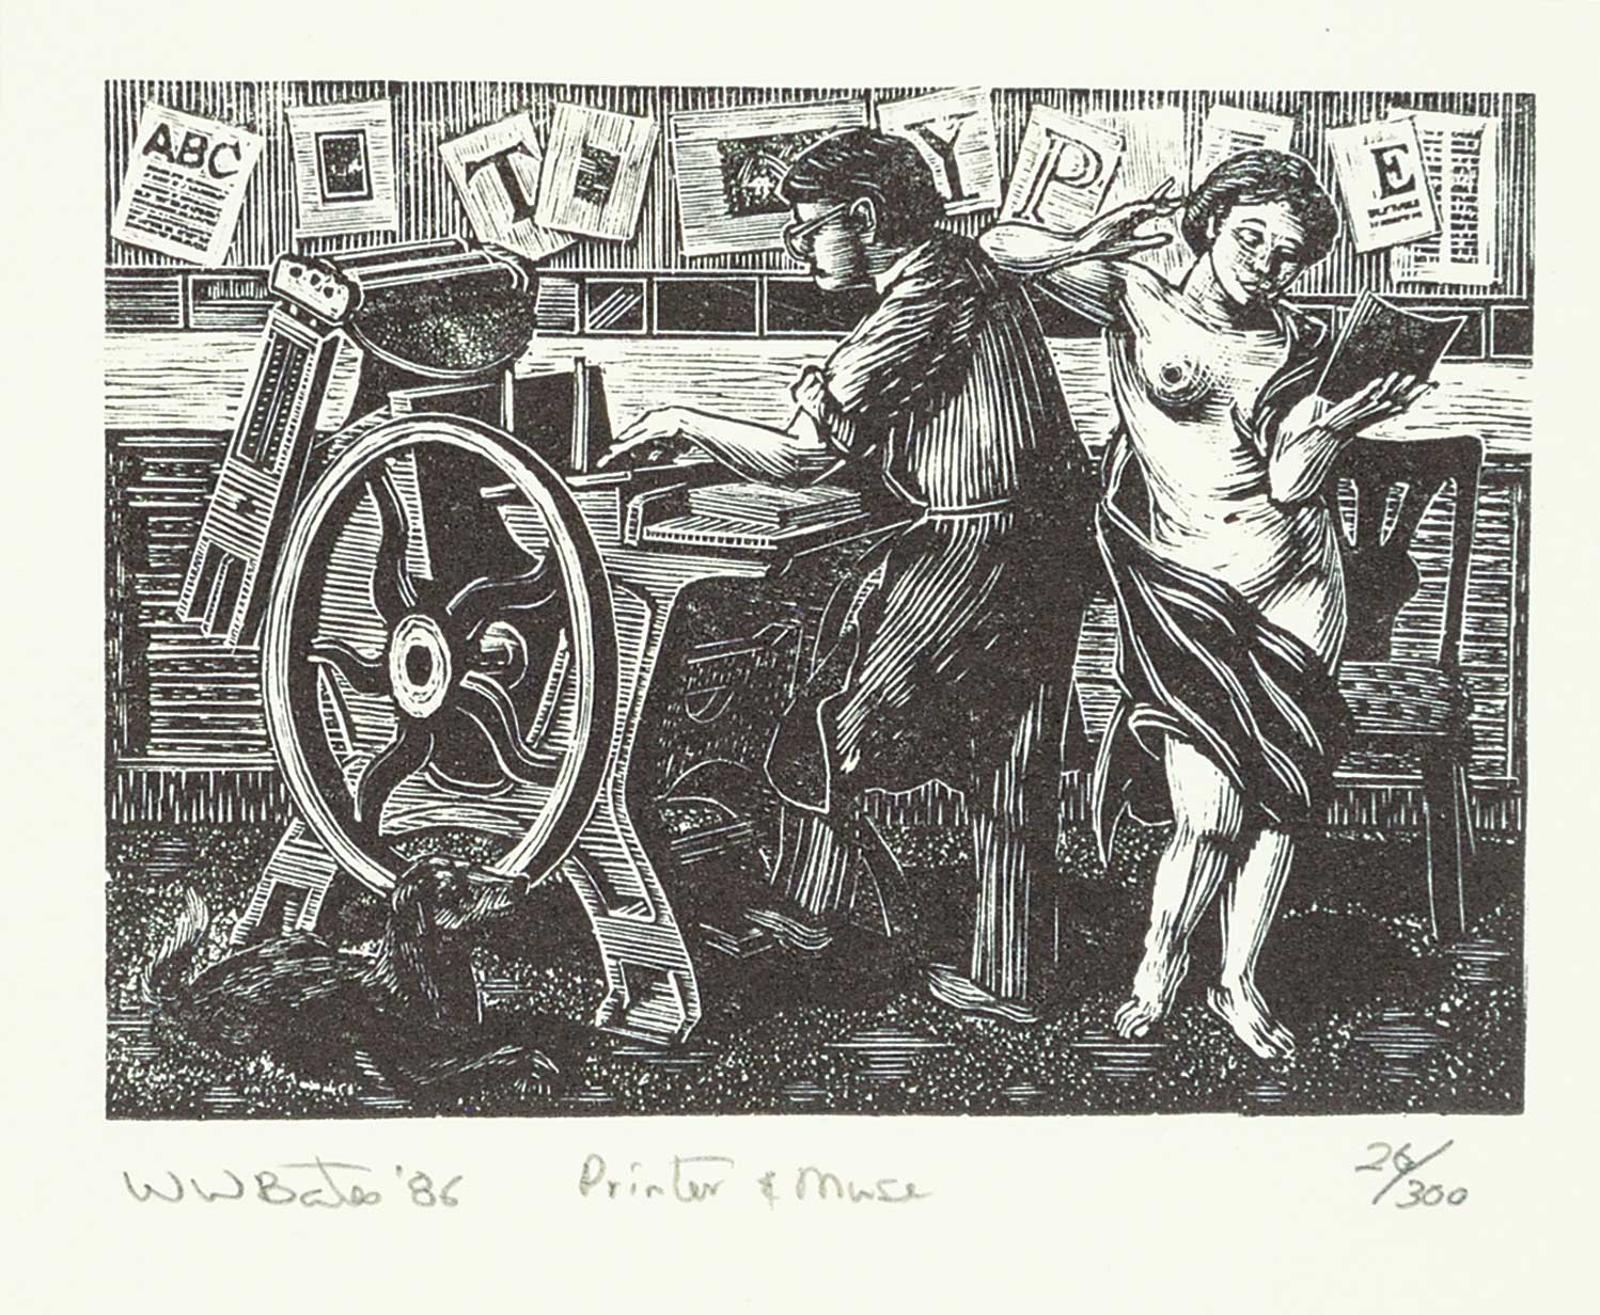 Wesley W. Bates - Printer and Muse  #26/300